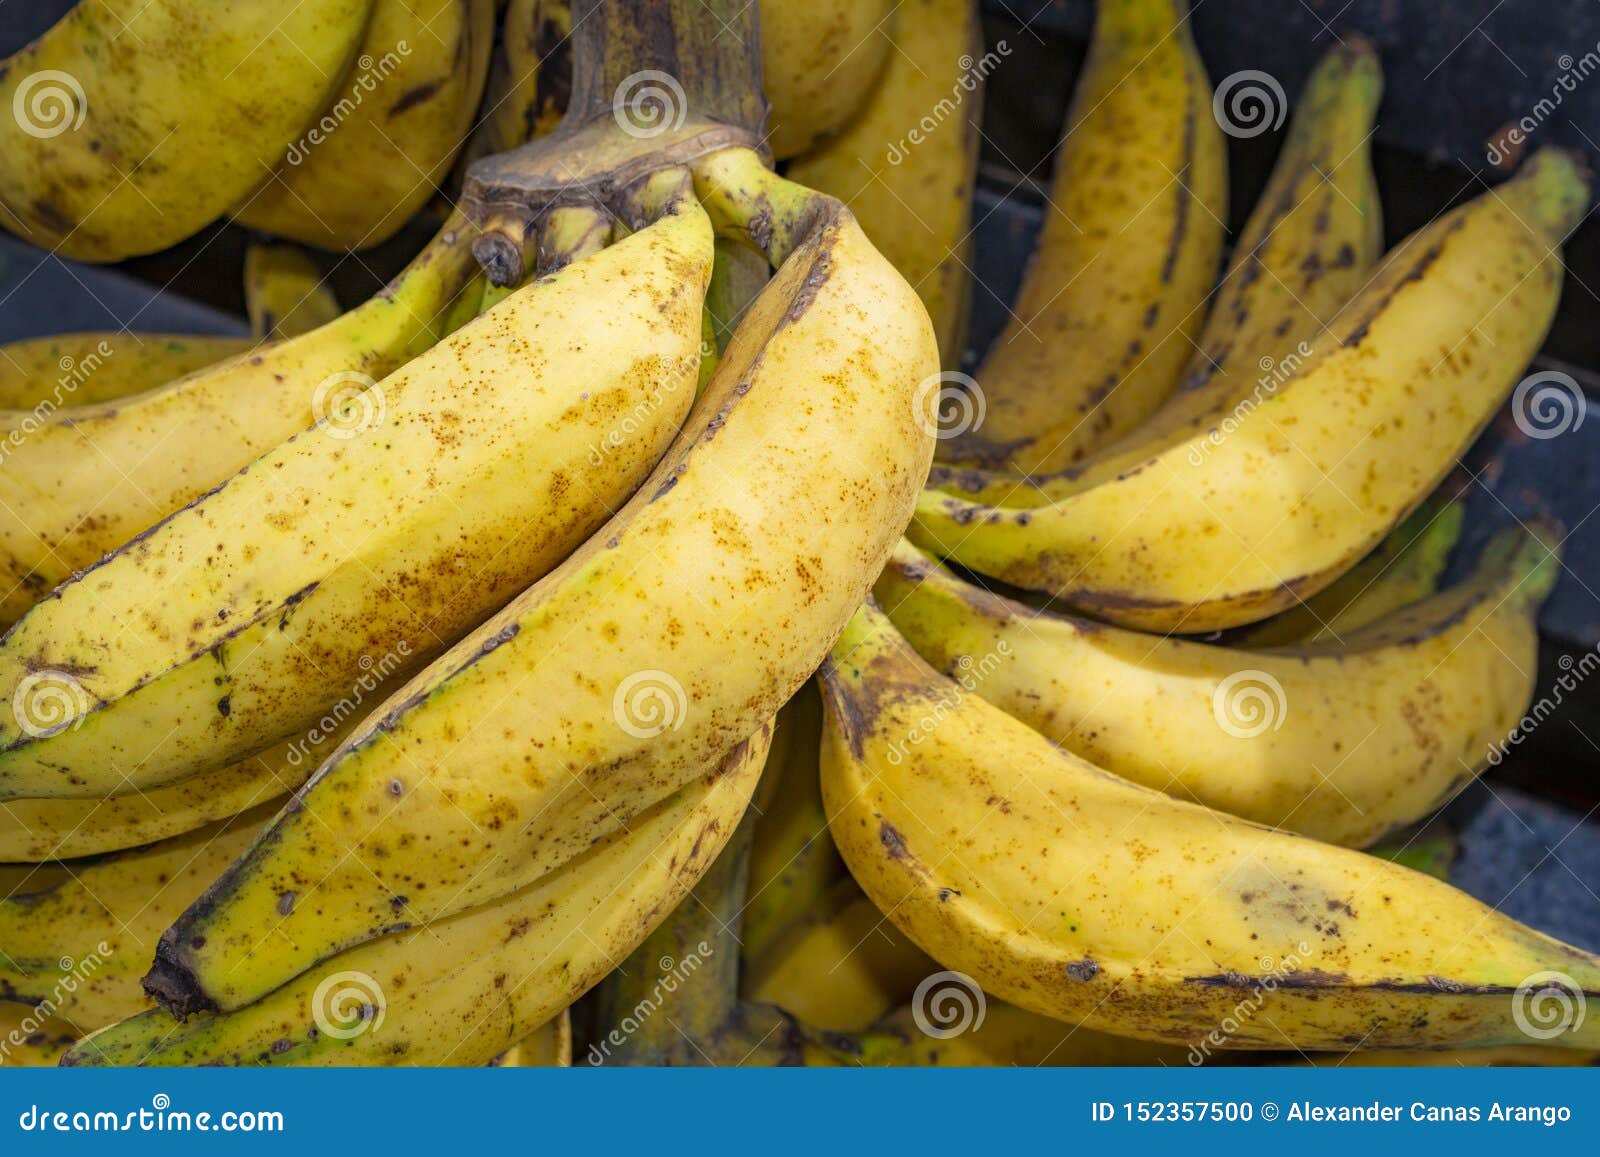 group of bananas yellow for sale